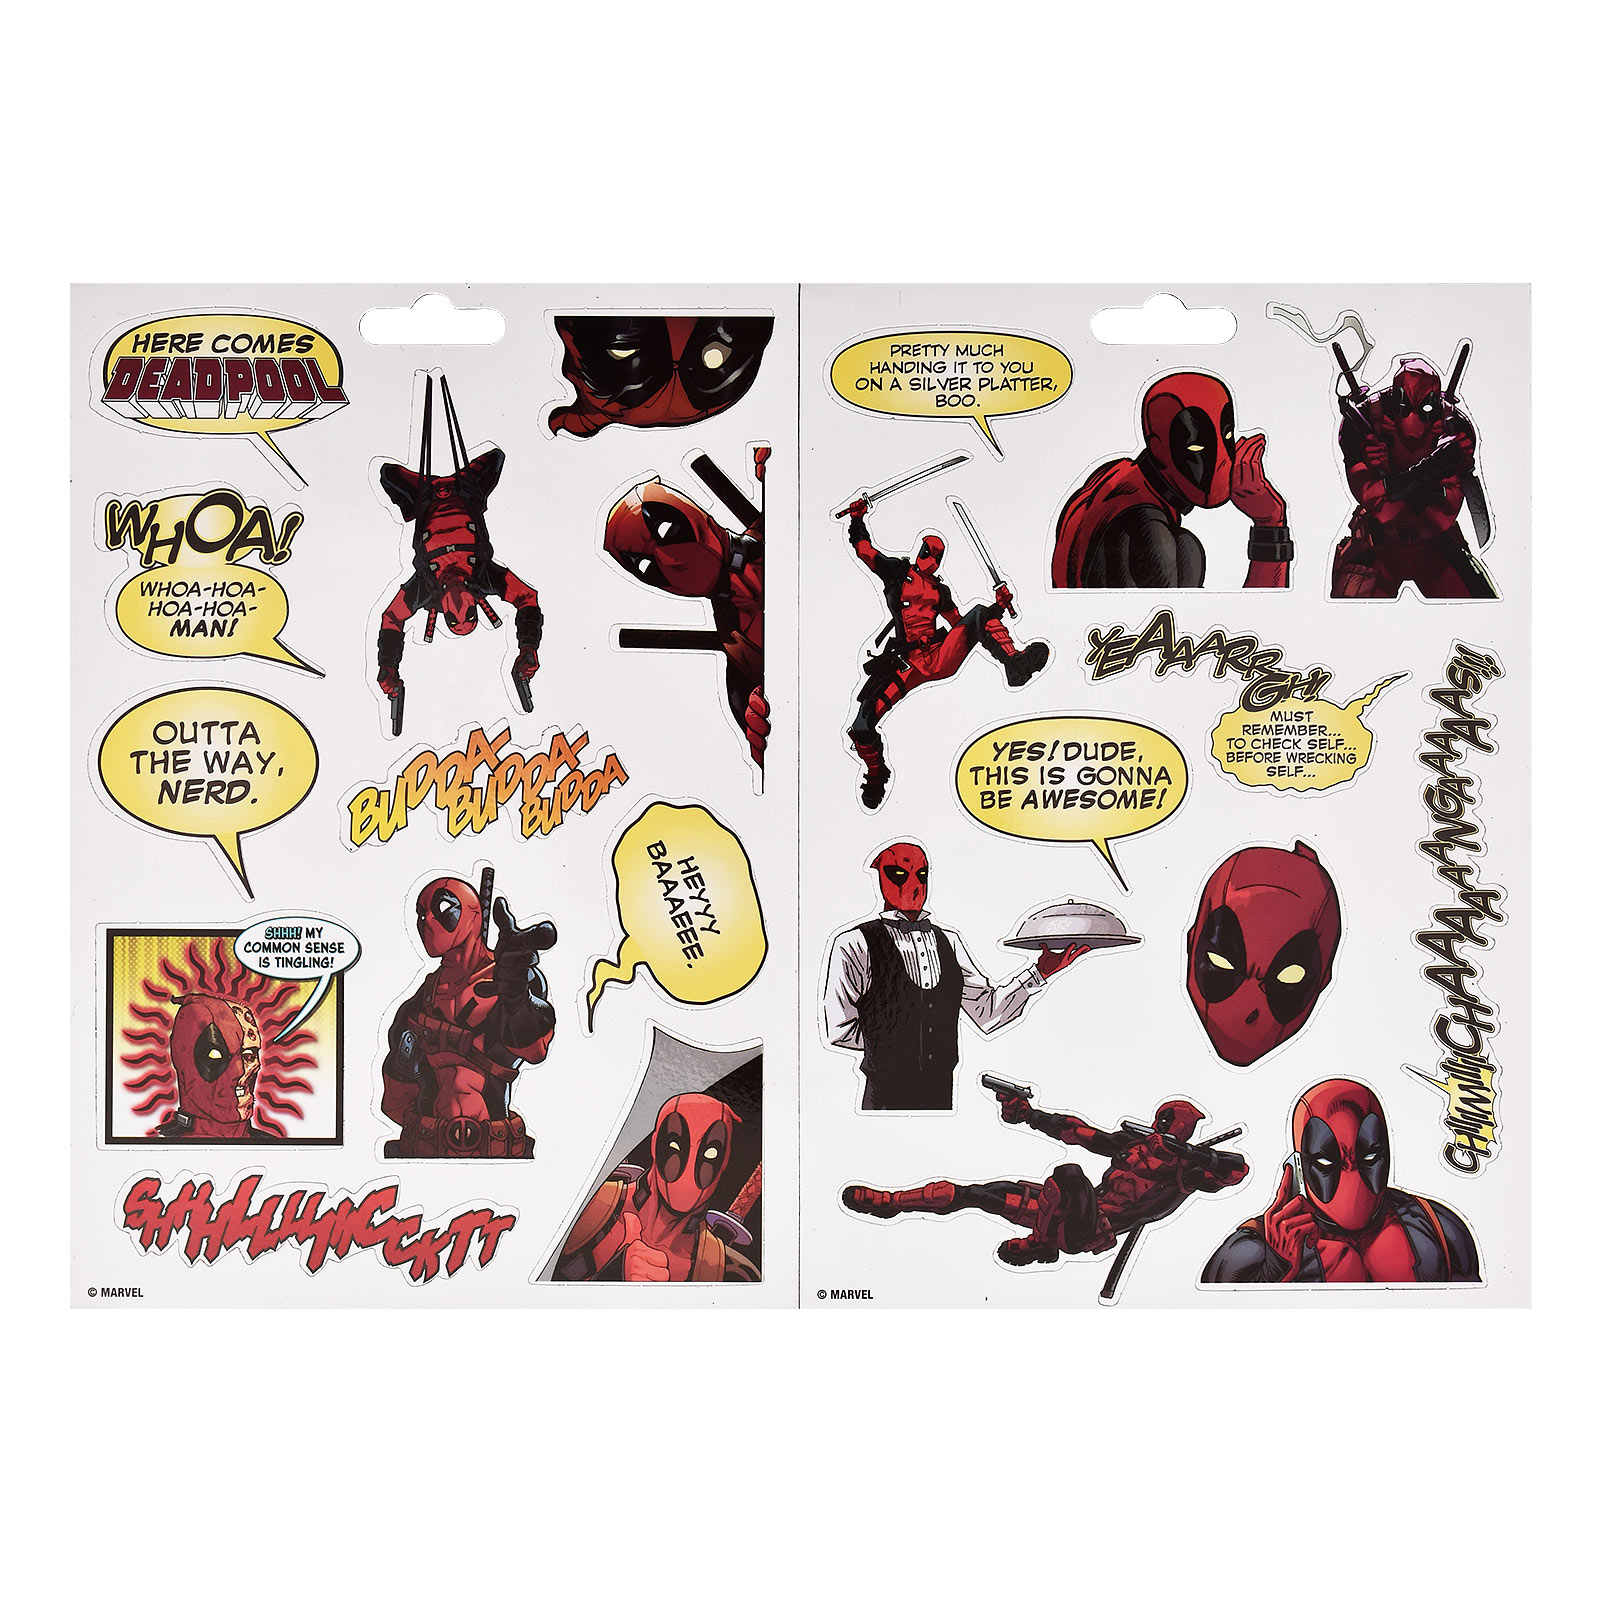 Deadpool - Comic Magnet-Set